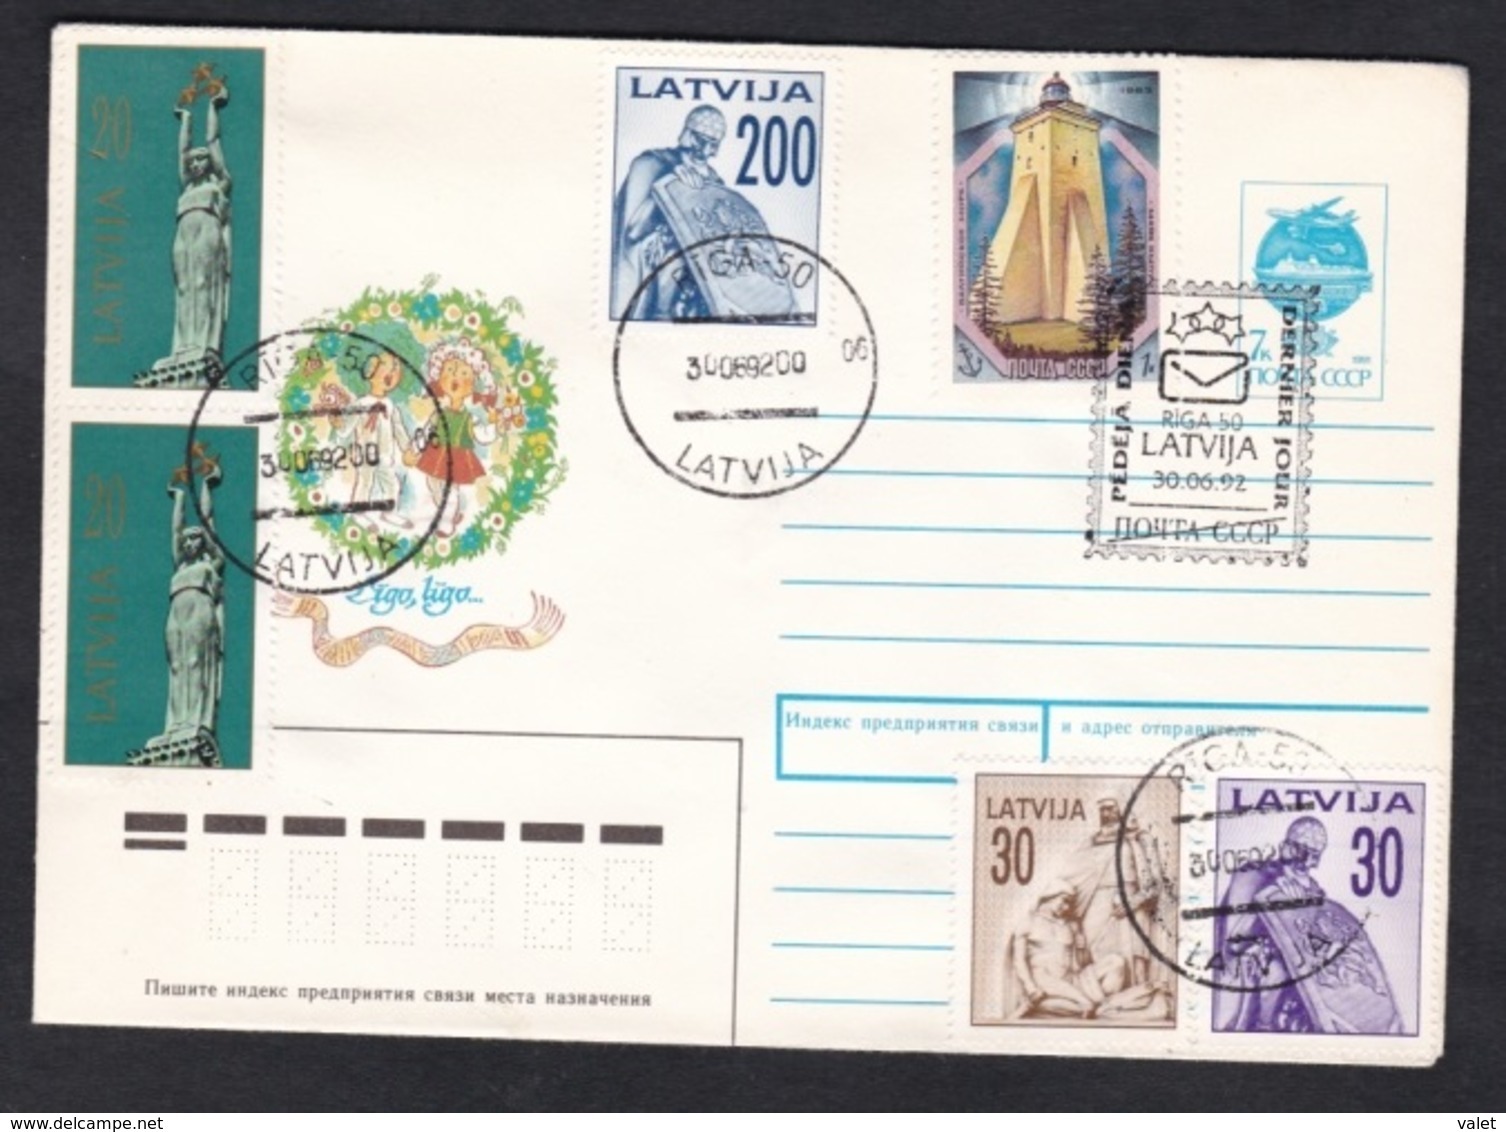 The Last Day Of The USSR Stamp In Latvia.-30-06-1992-Последний день хождения марок СССР в Латвии.Lighthouse . - Lighthouses